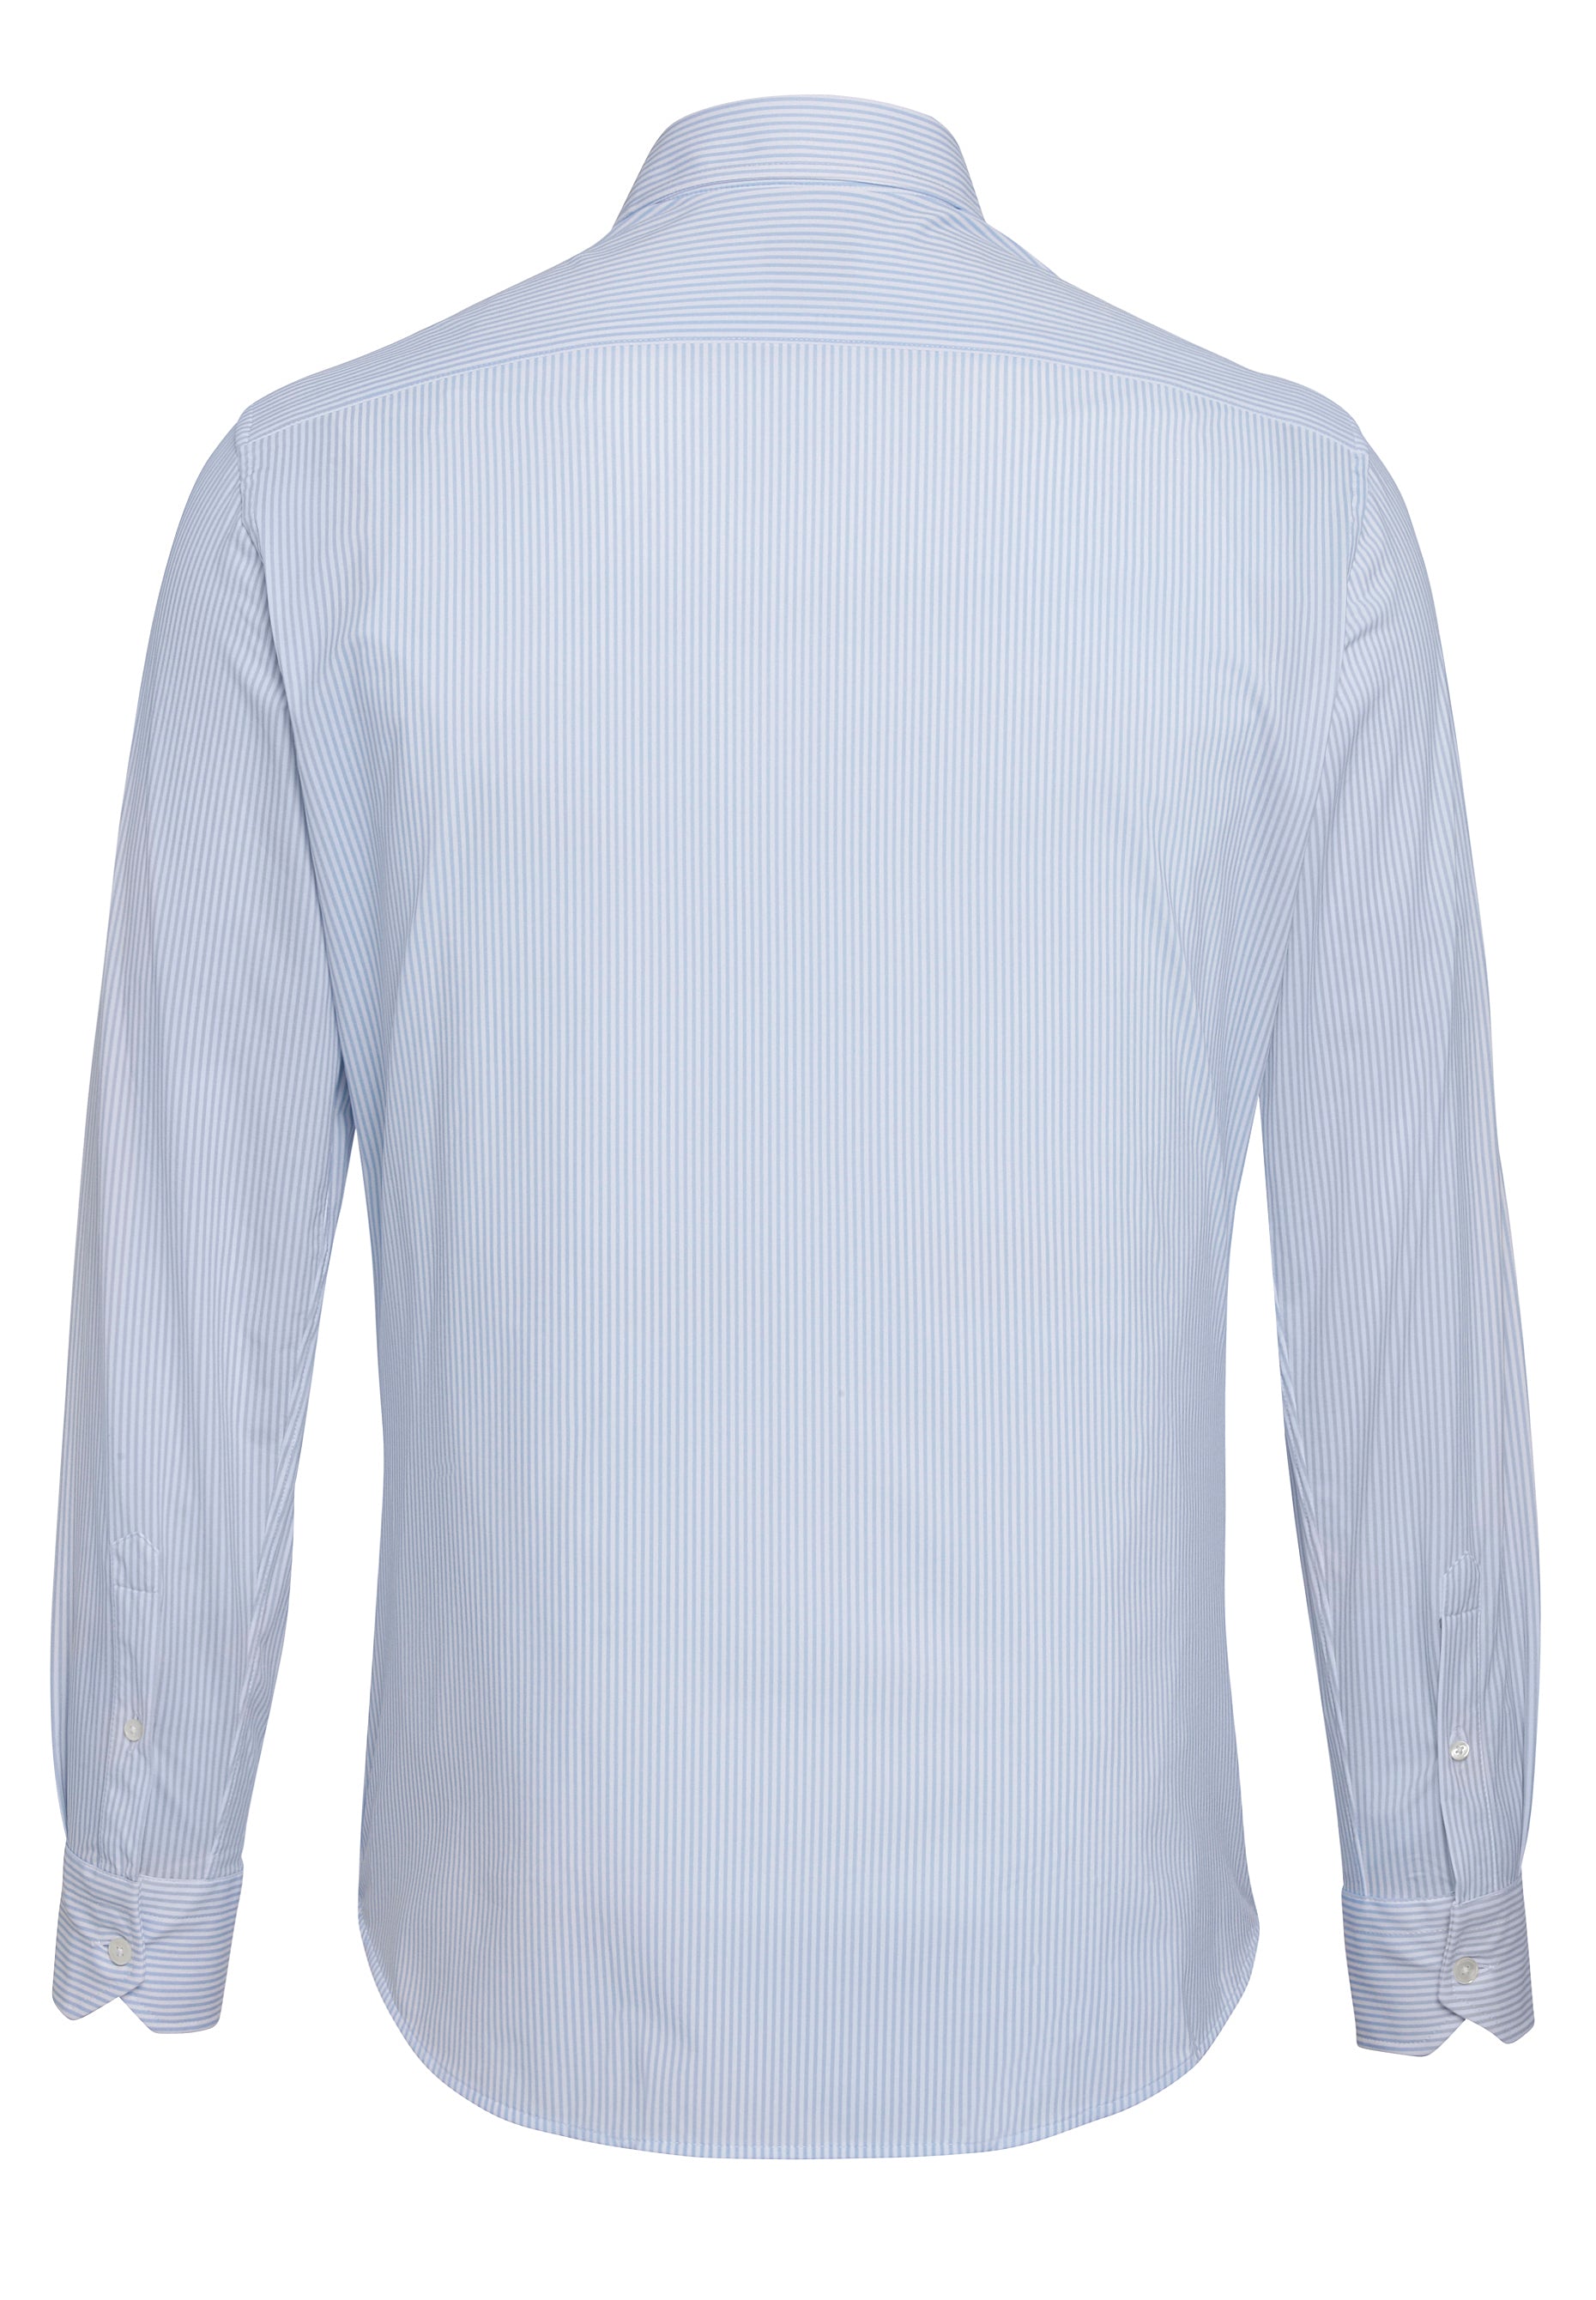 T1011-311 Traiano Rossini Radical Fit Shirt 160 light blue striped